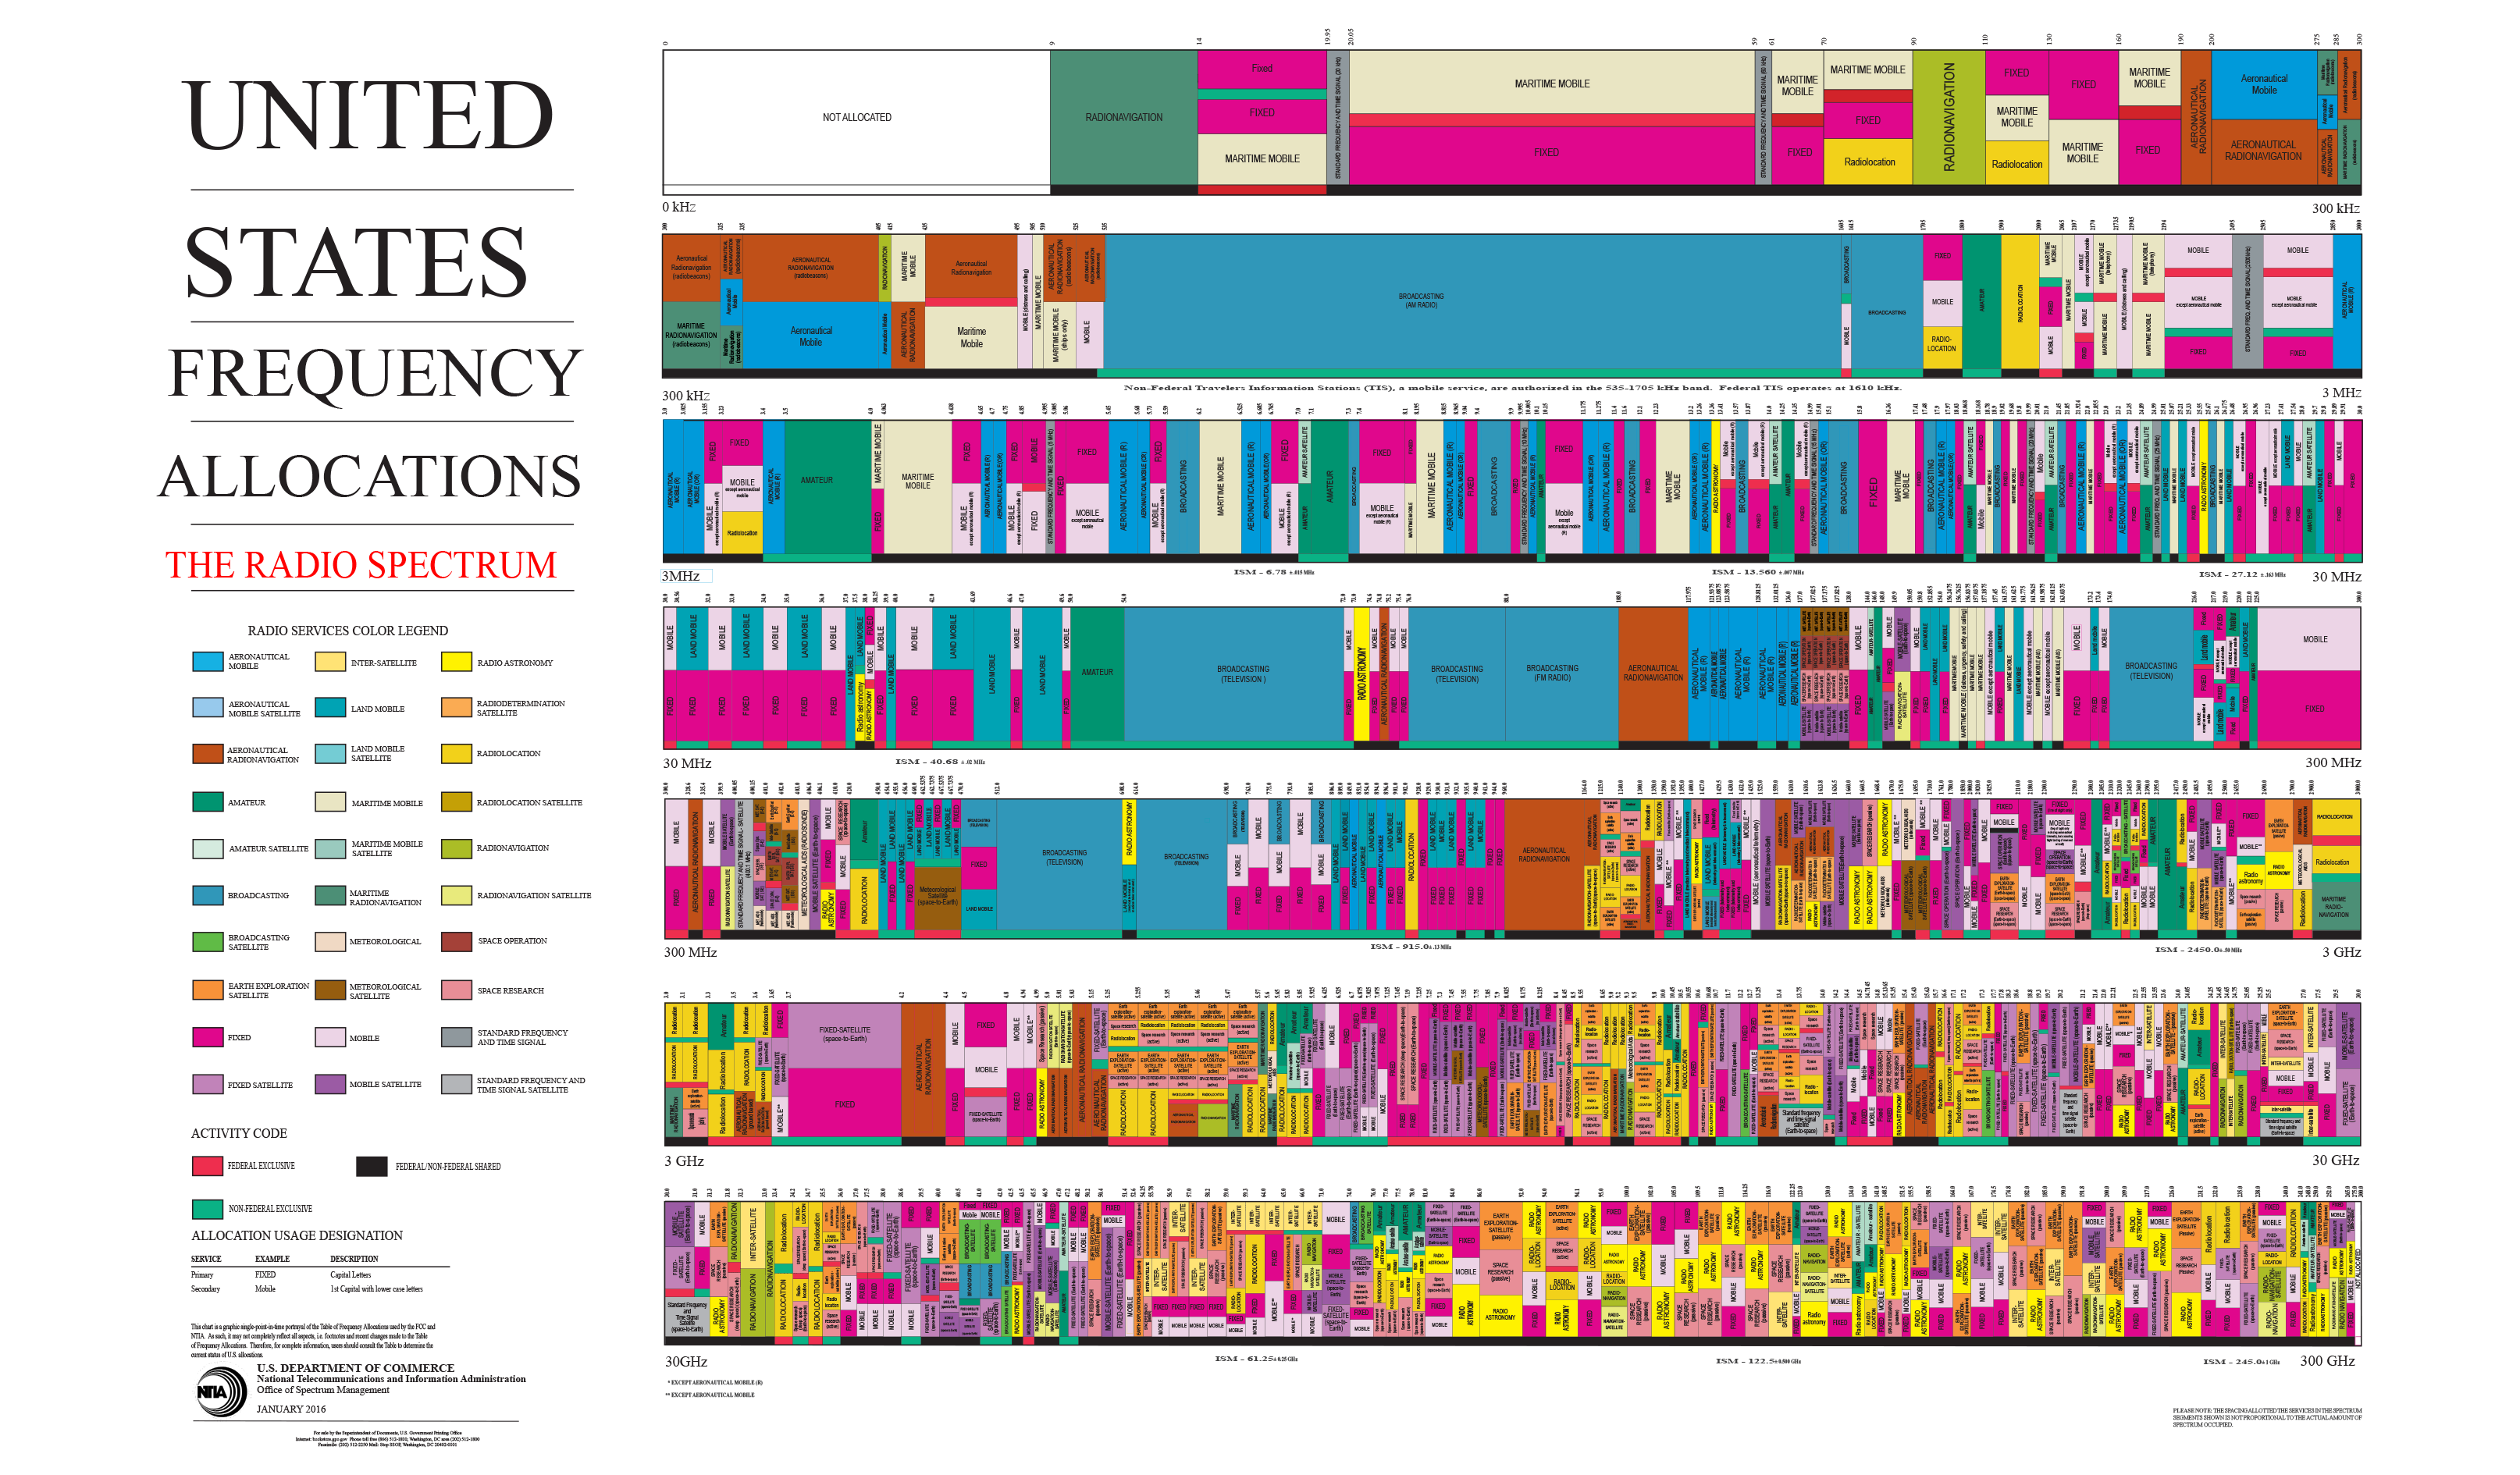 US Radio frequency spectrum chart